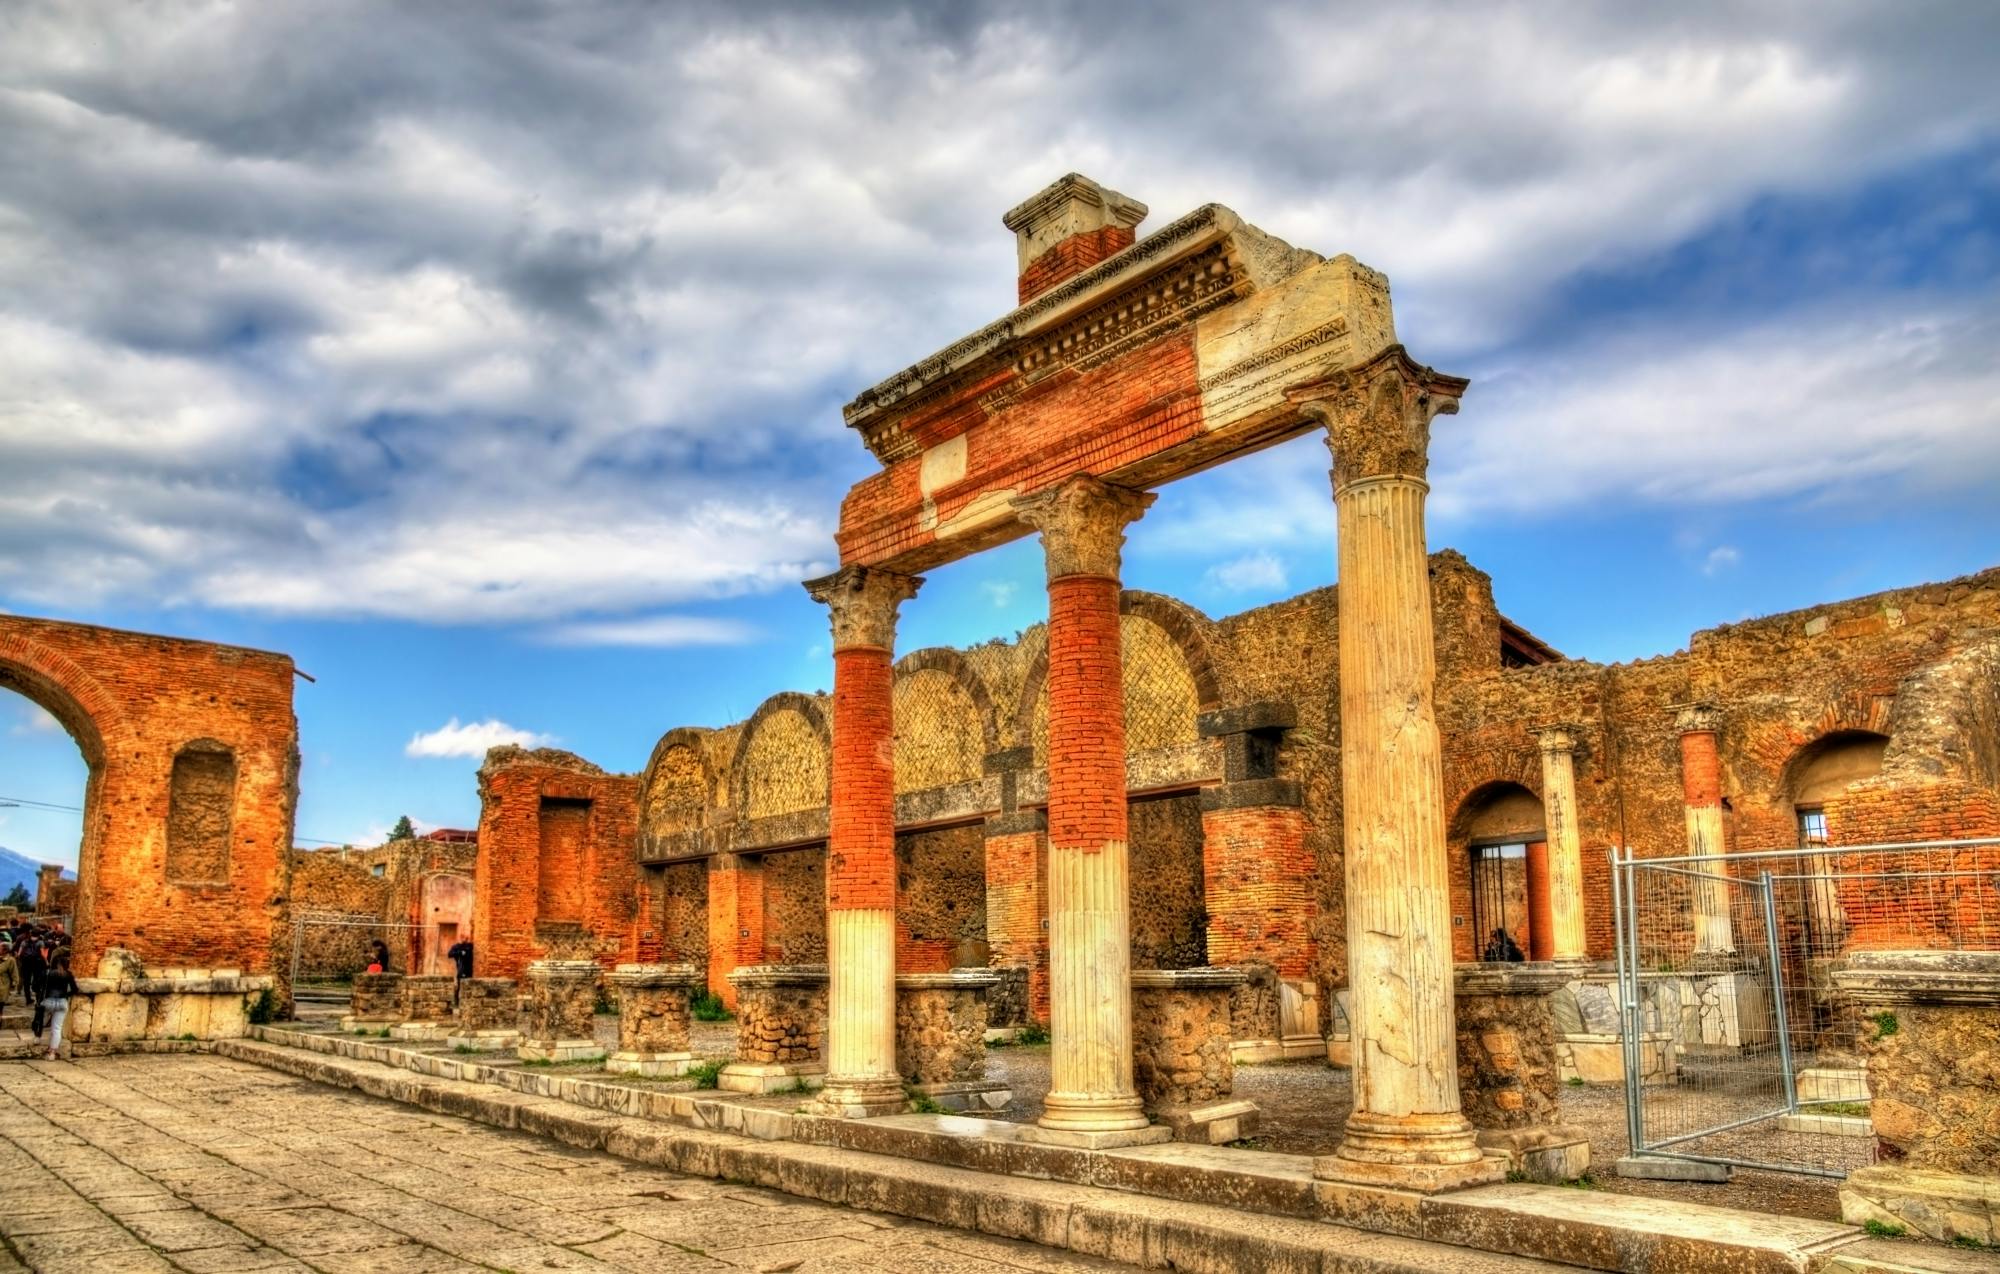 Audiogeführte Tour durch Pompeji, Herculaneum und Vesuv ab Pompeji